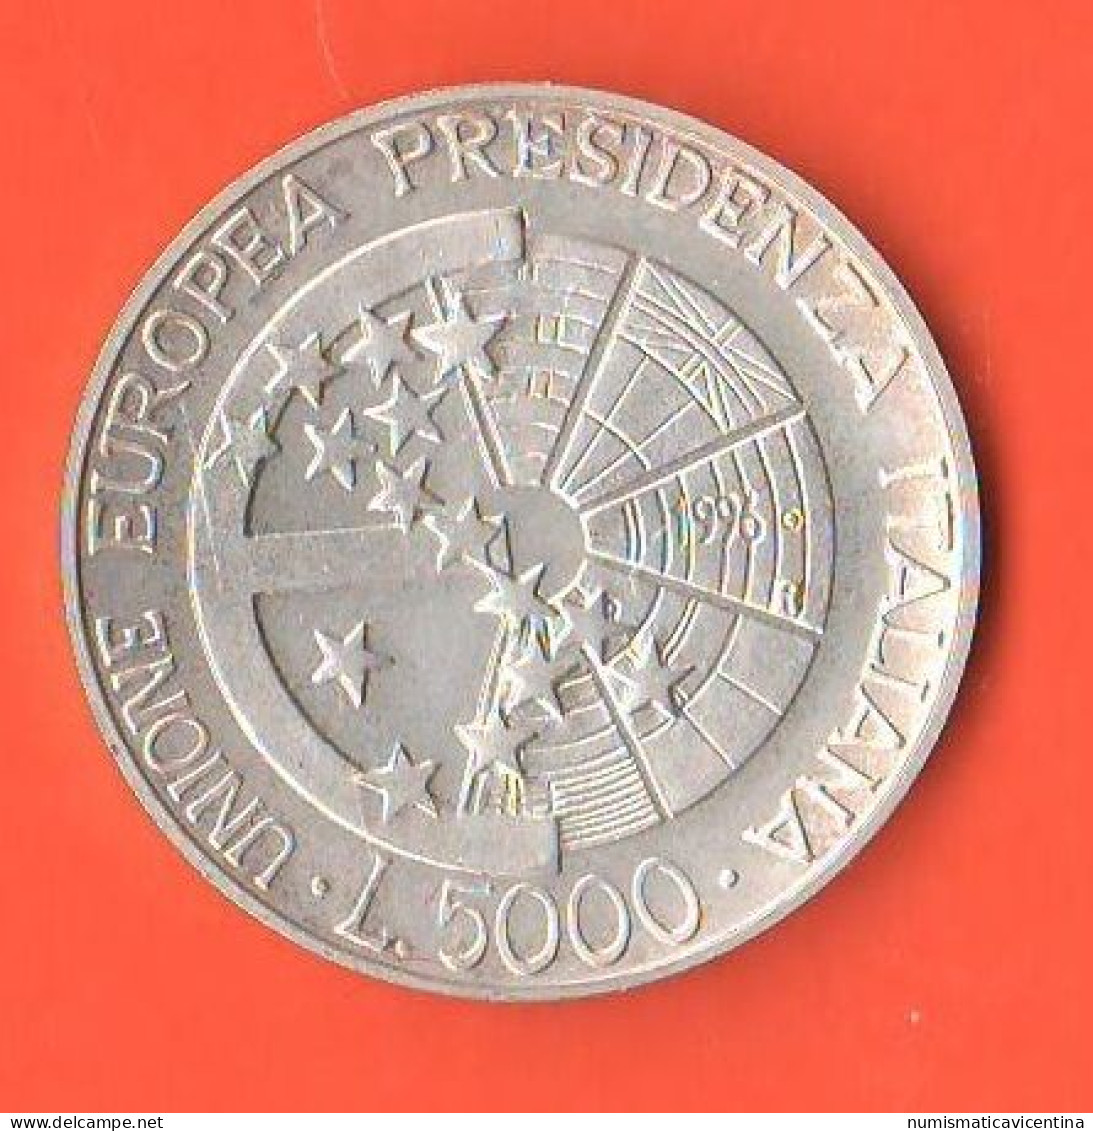 Italia 5000 Lire 1996 Presidenza Cee Italian Presidency European Union Italy Italie Silver Coin - Gedenkmünzen